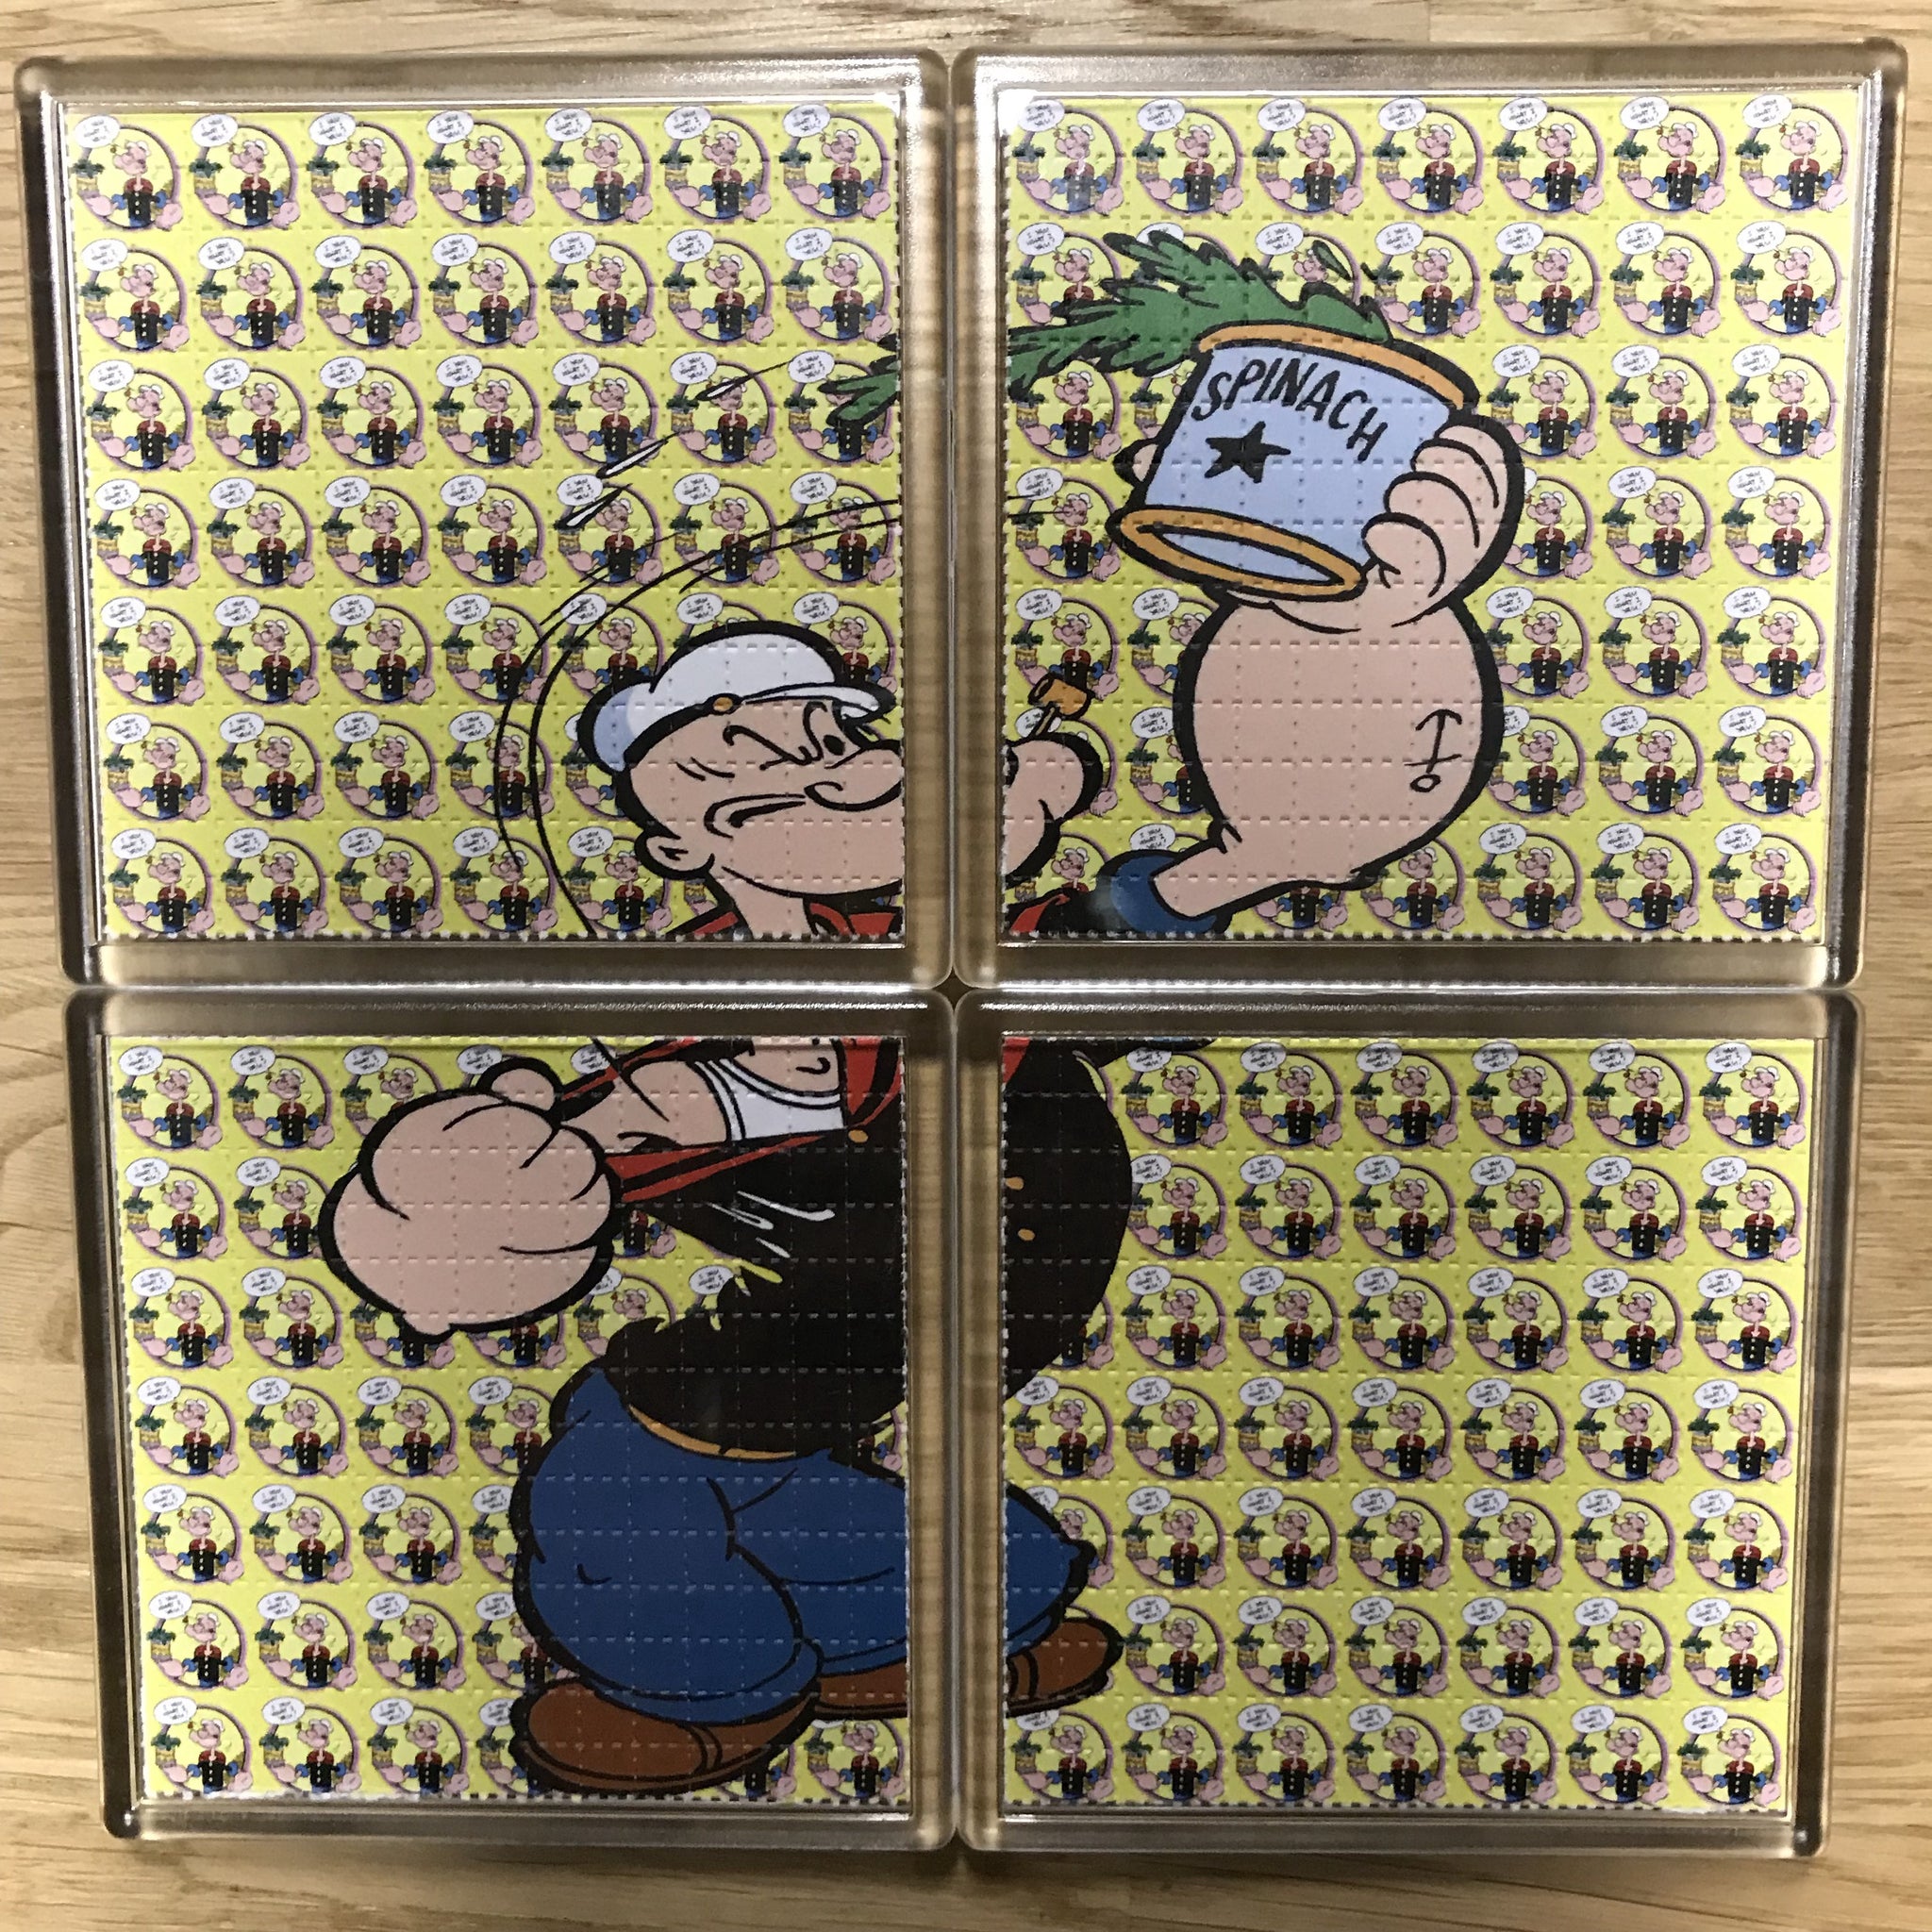 Popeye - Blotter Art - Highly Collectible Artwork Blotter Paper Coaster (4 pack)